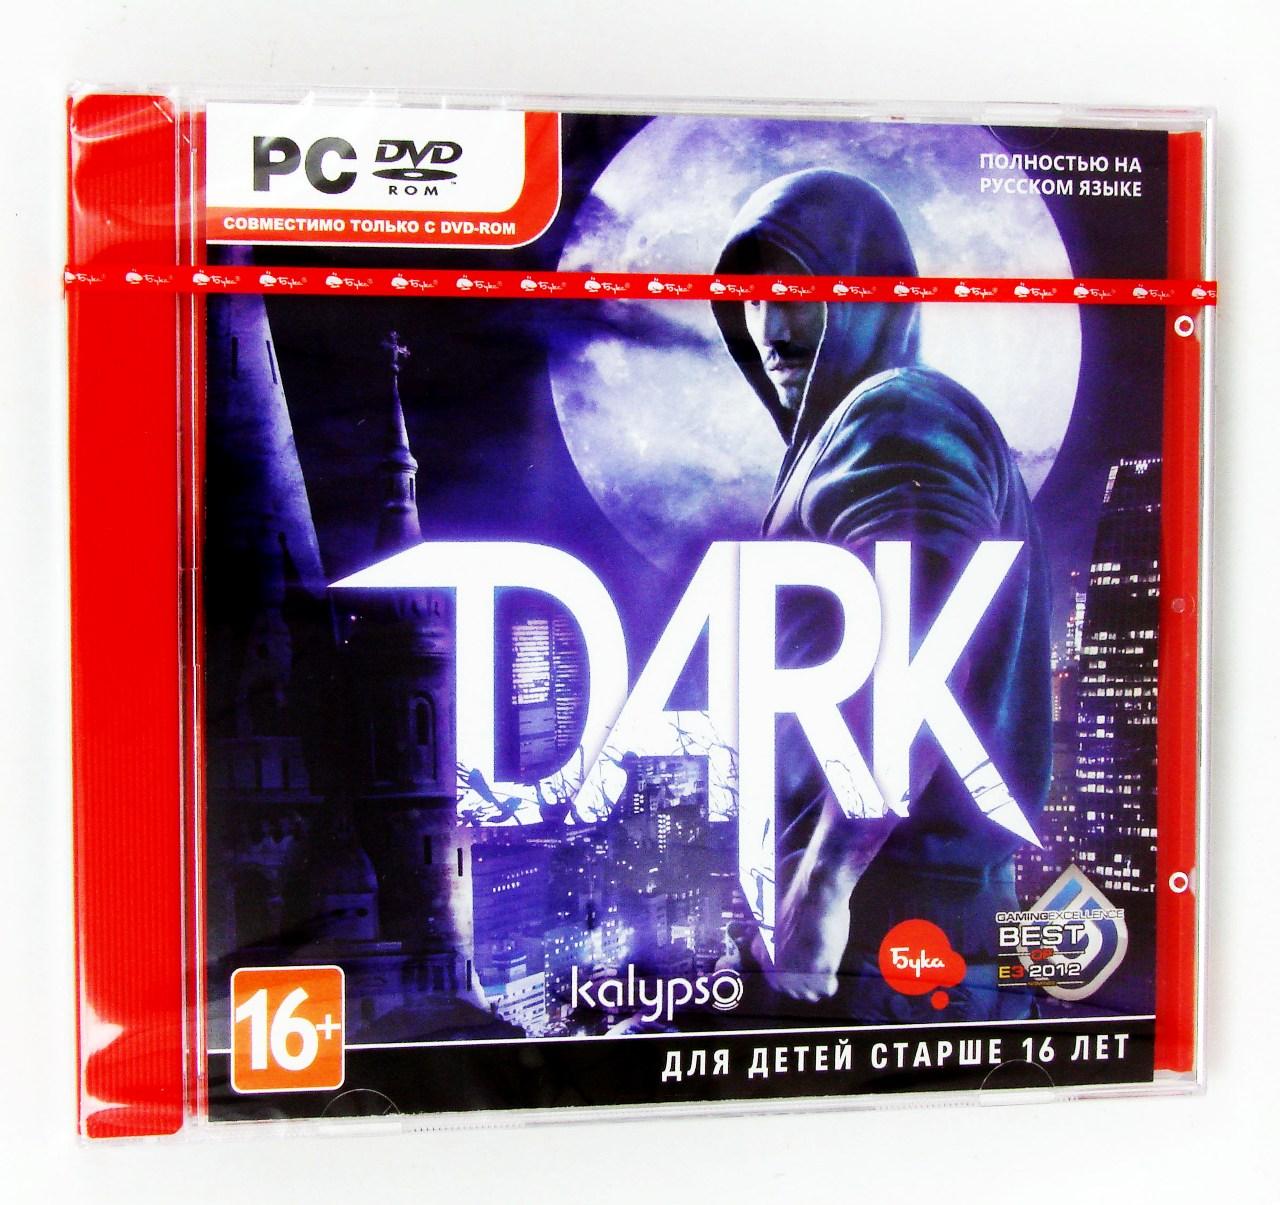 Компьютерный компакт-диск DARK (PC), "Бука", DVD